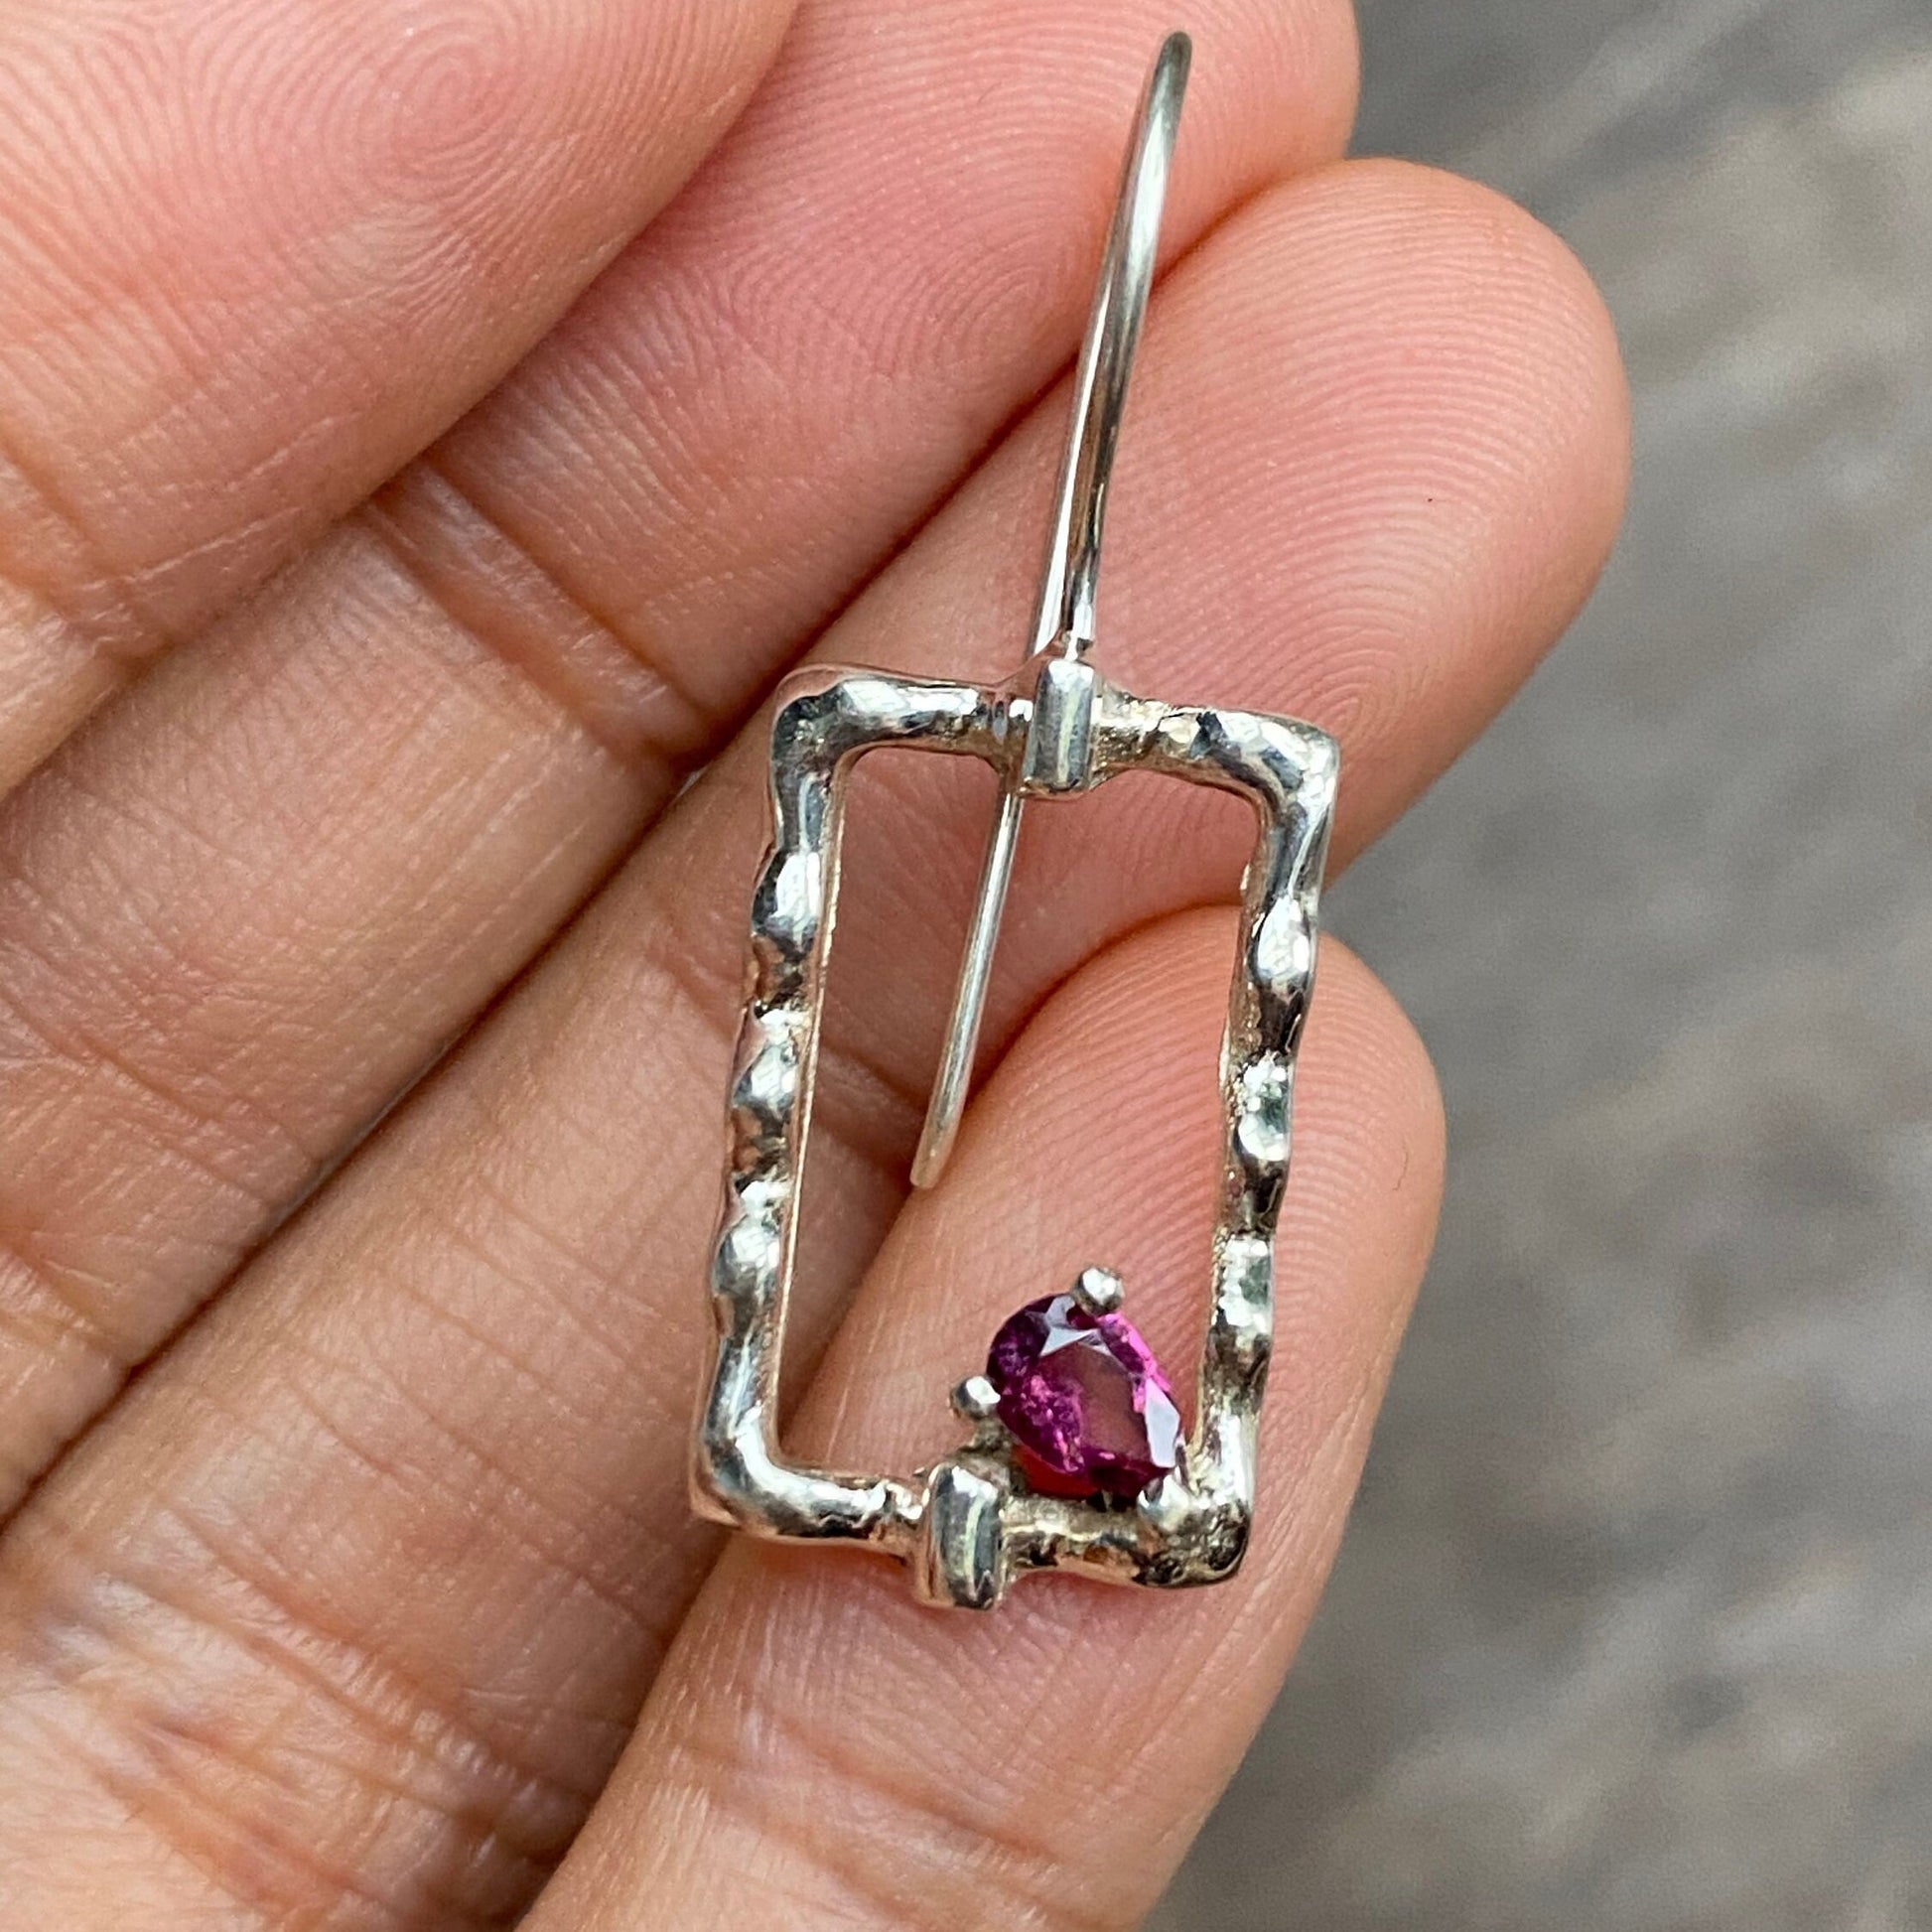 Rhodolite Garnet Earrings, Sterling Silver Earrings, Red Pink Gemstone Earrings, January Birthstone, Birthday Gifts For Her